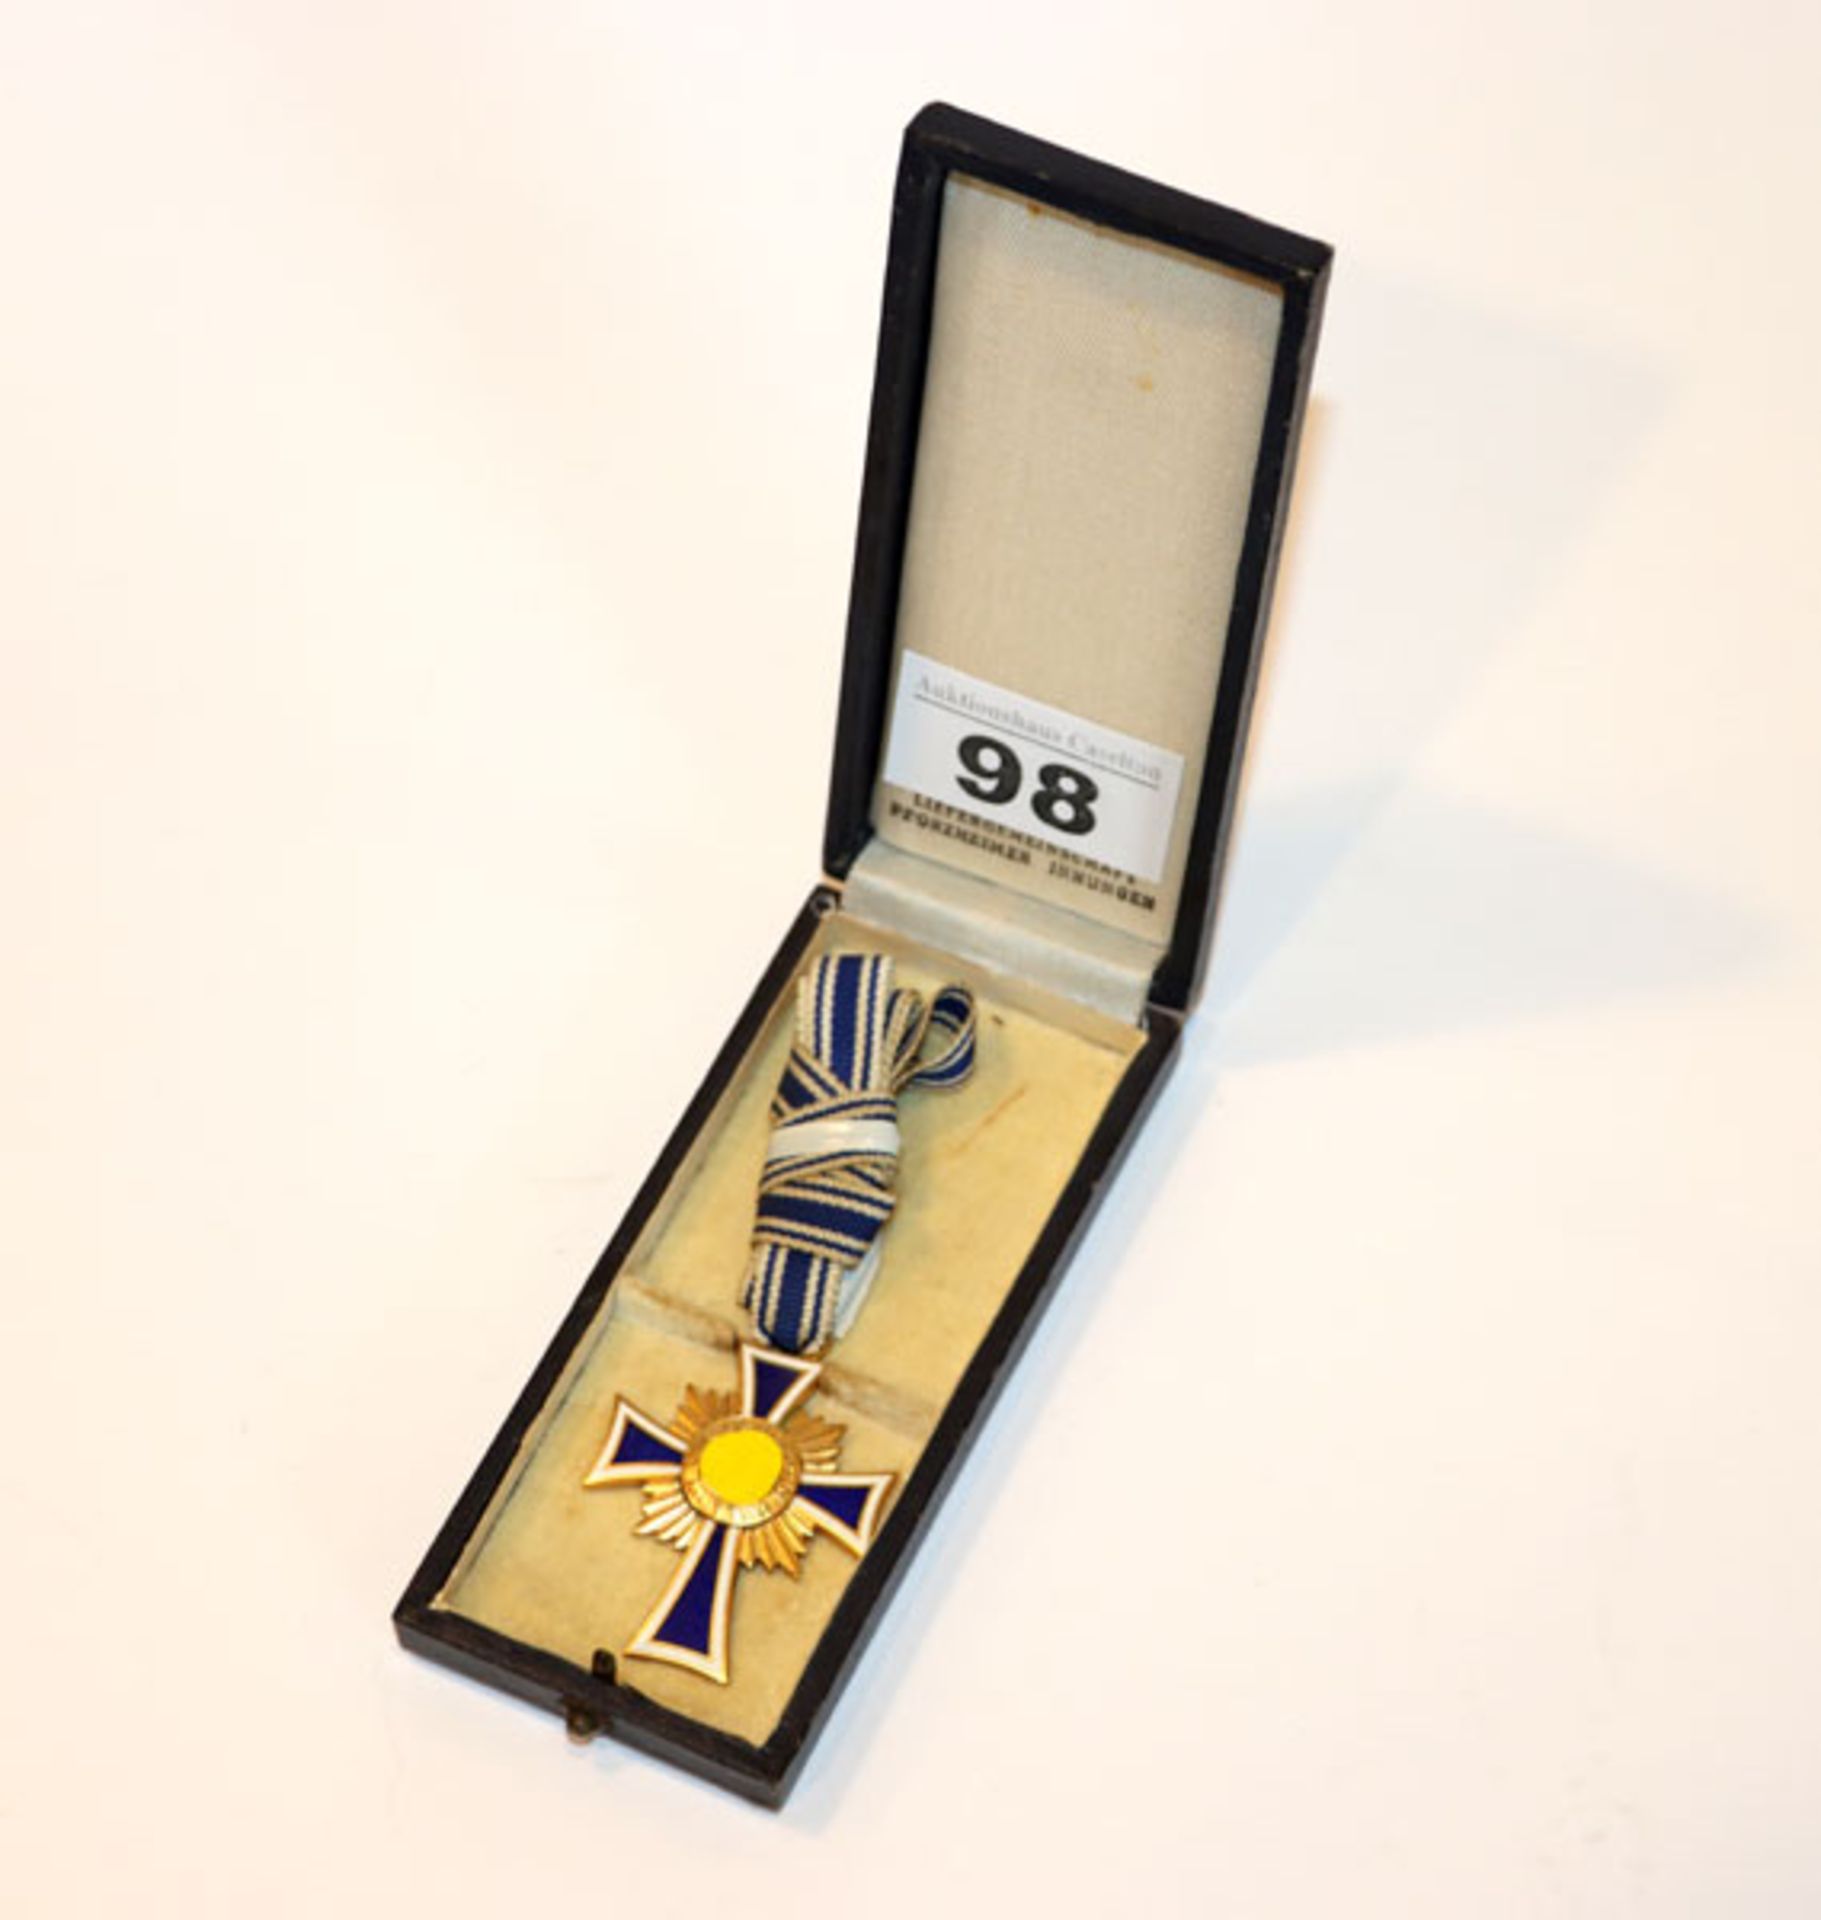 Mutterkreuz in Gold i n original Verleihungsetui, rückseitig graviert 16. Dezember 1938